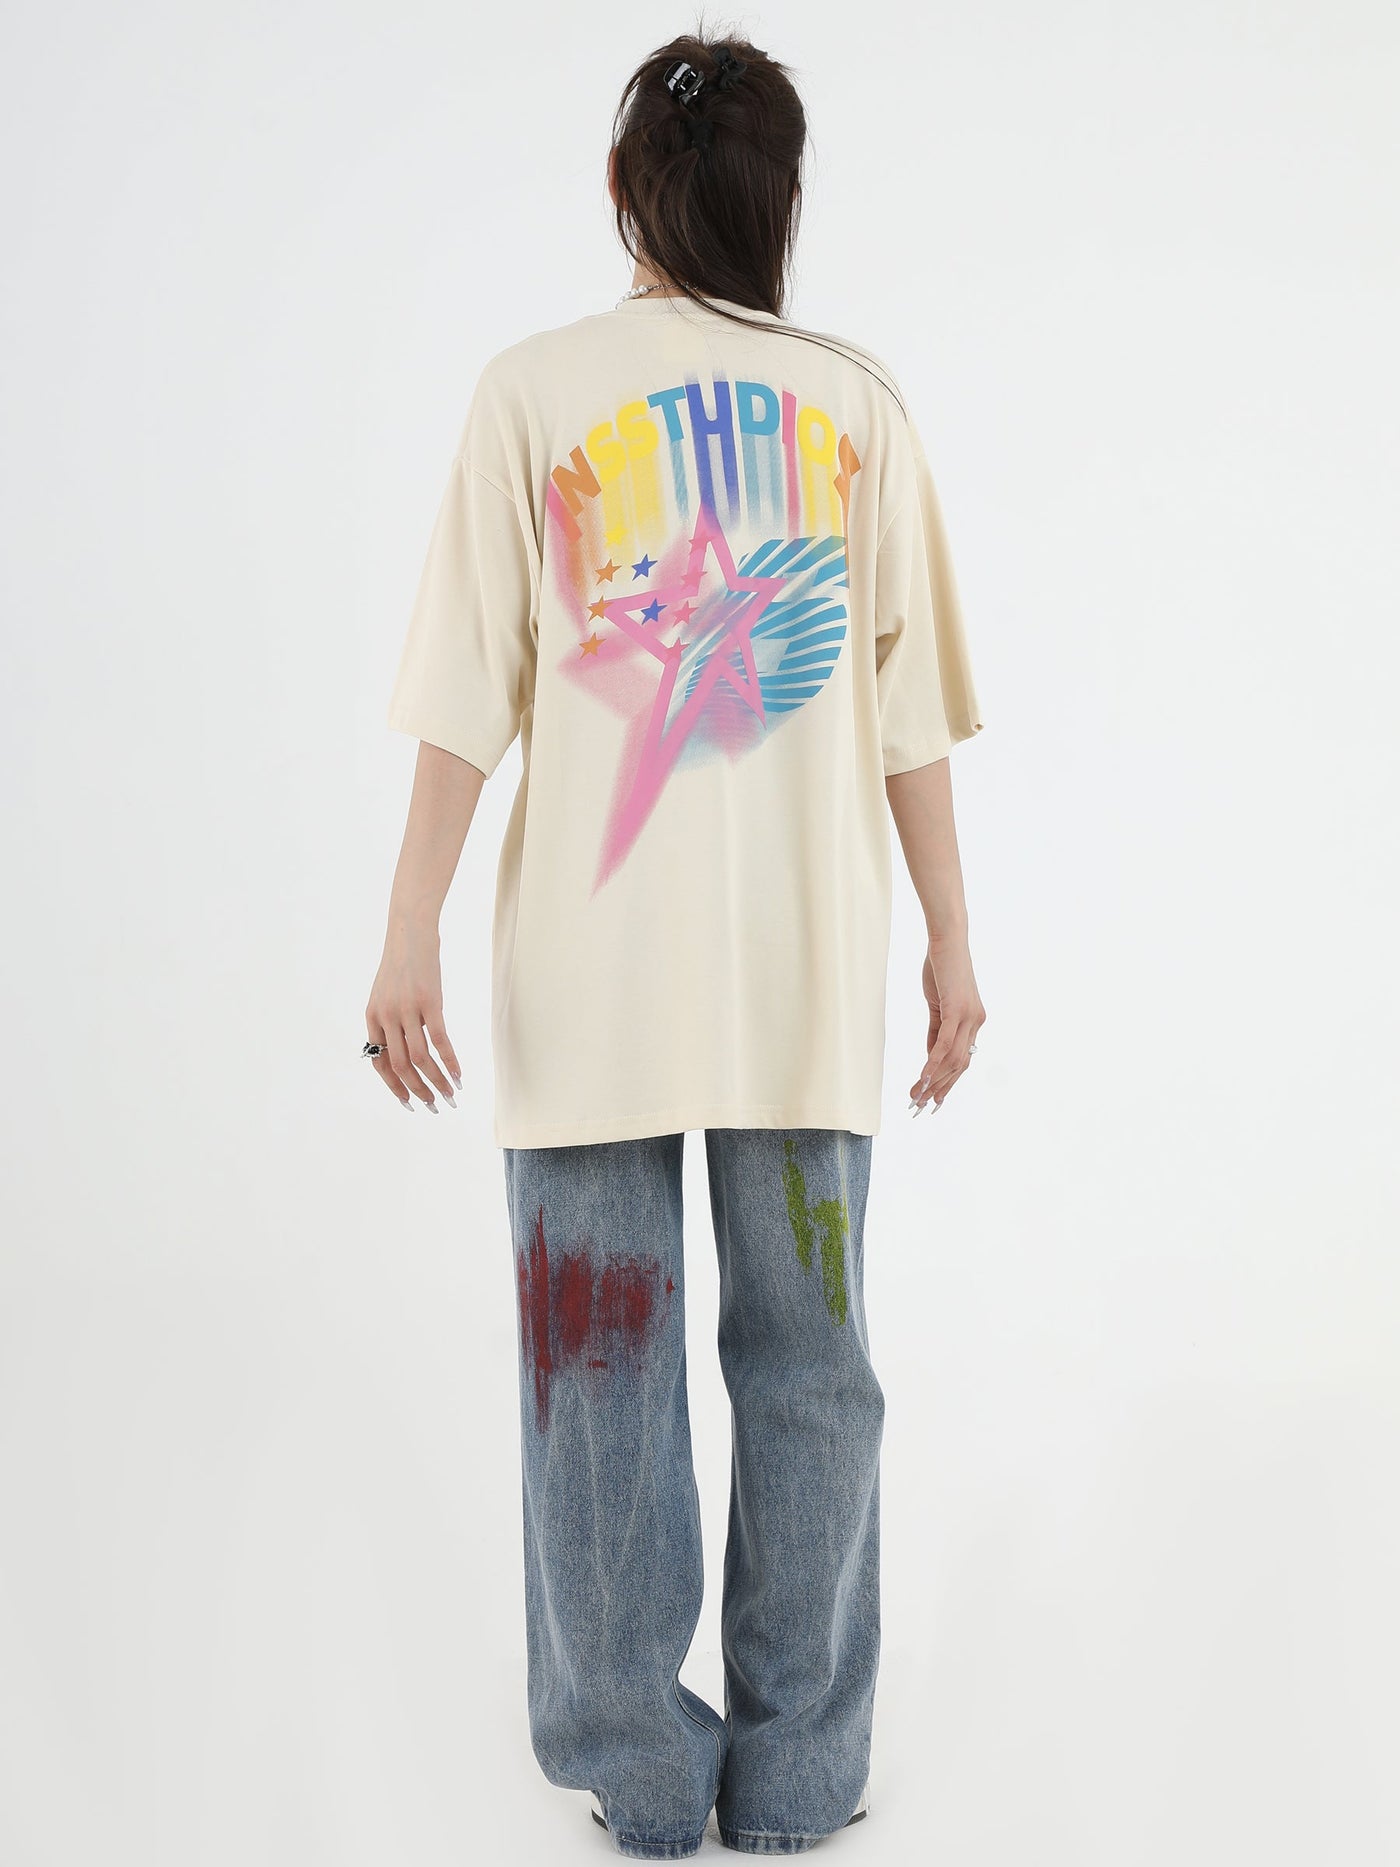 Graffiti Foam Star Logo T-Shirt Korean Street Fashion T-Shirt By INS Korea Shop Online at OH Vault